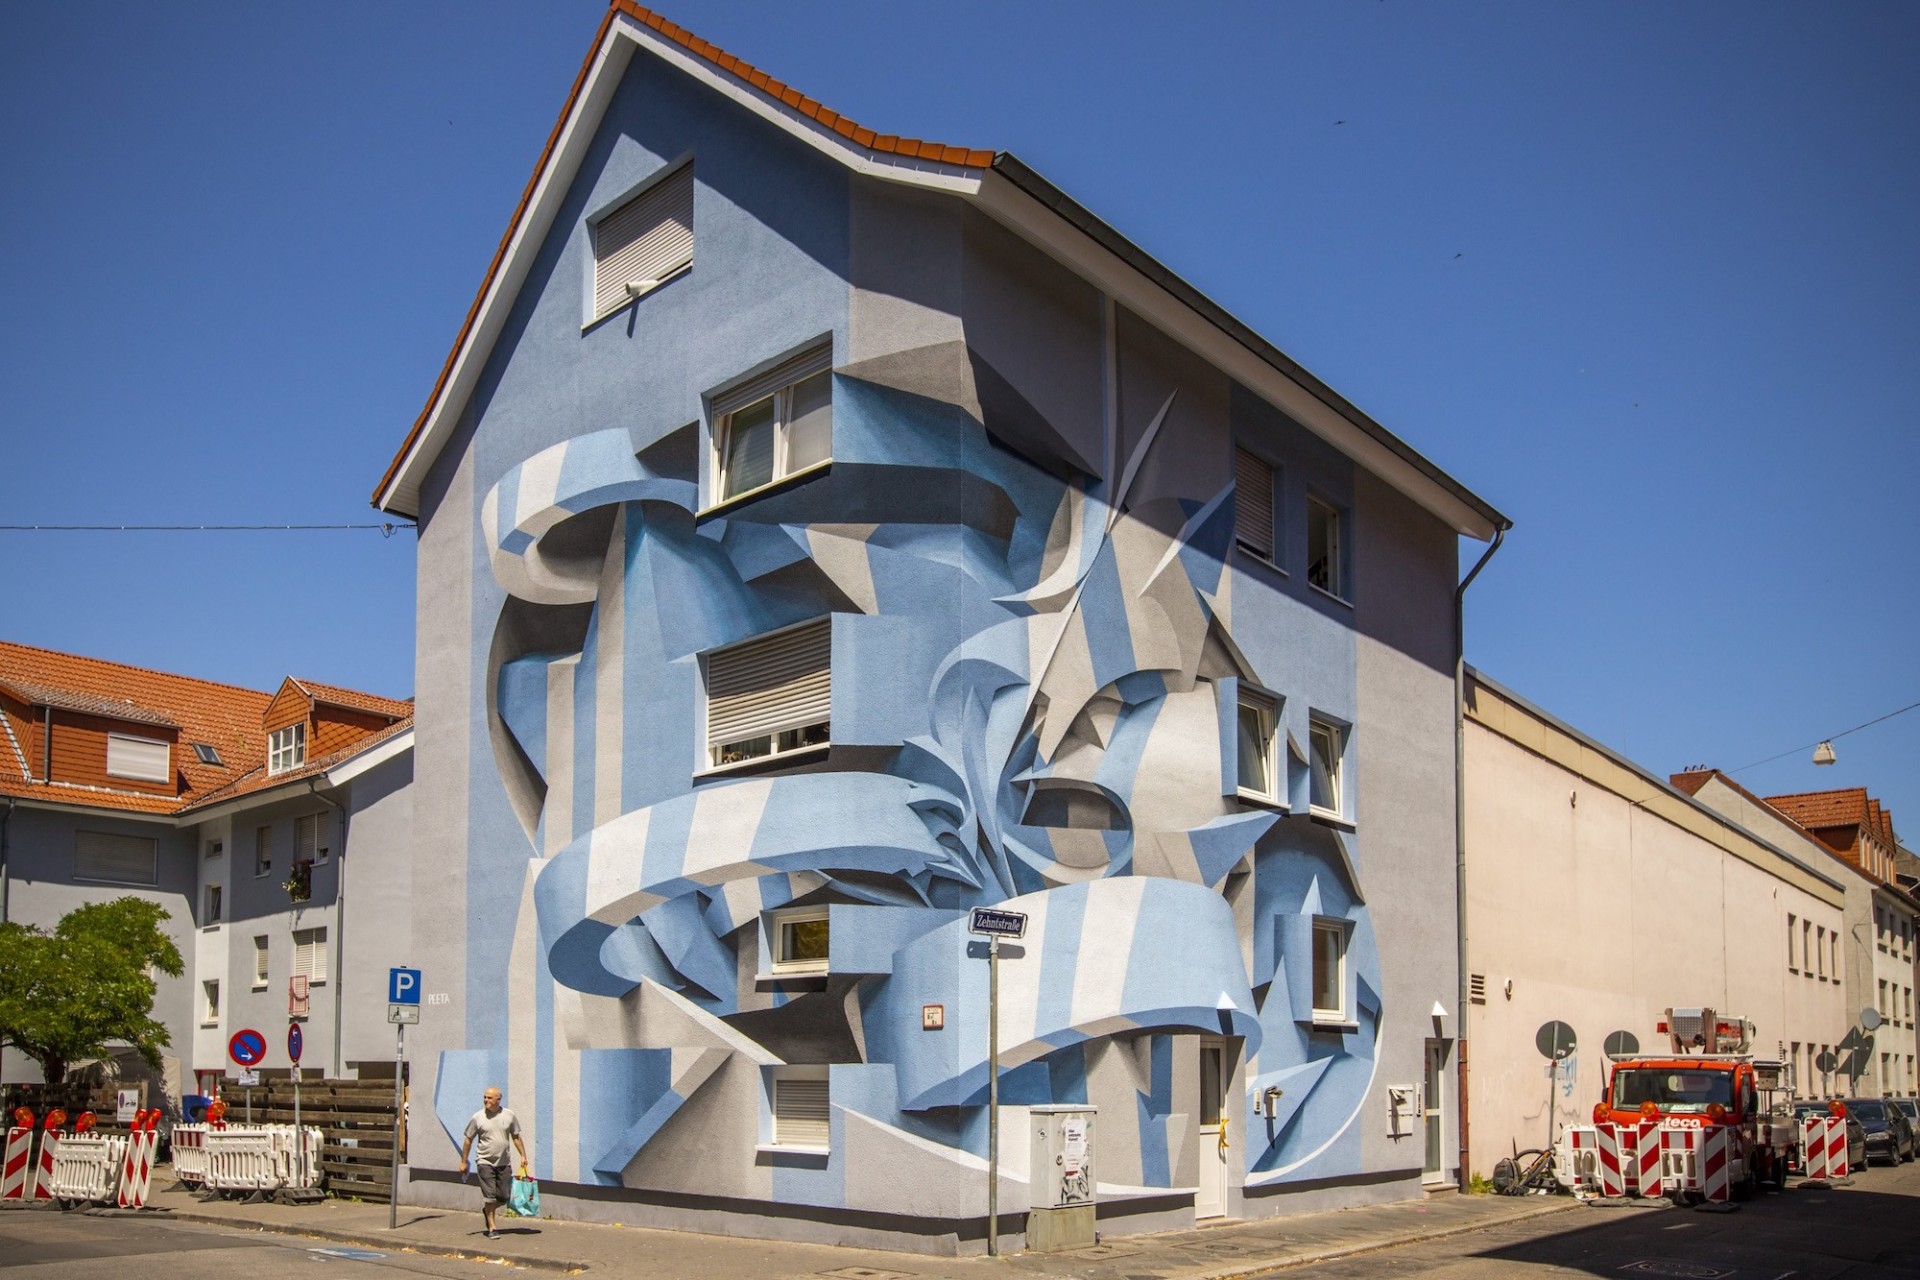 Anamorphic Street Art and Graffiti by Peeta